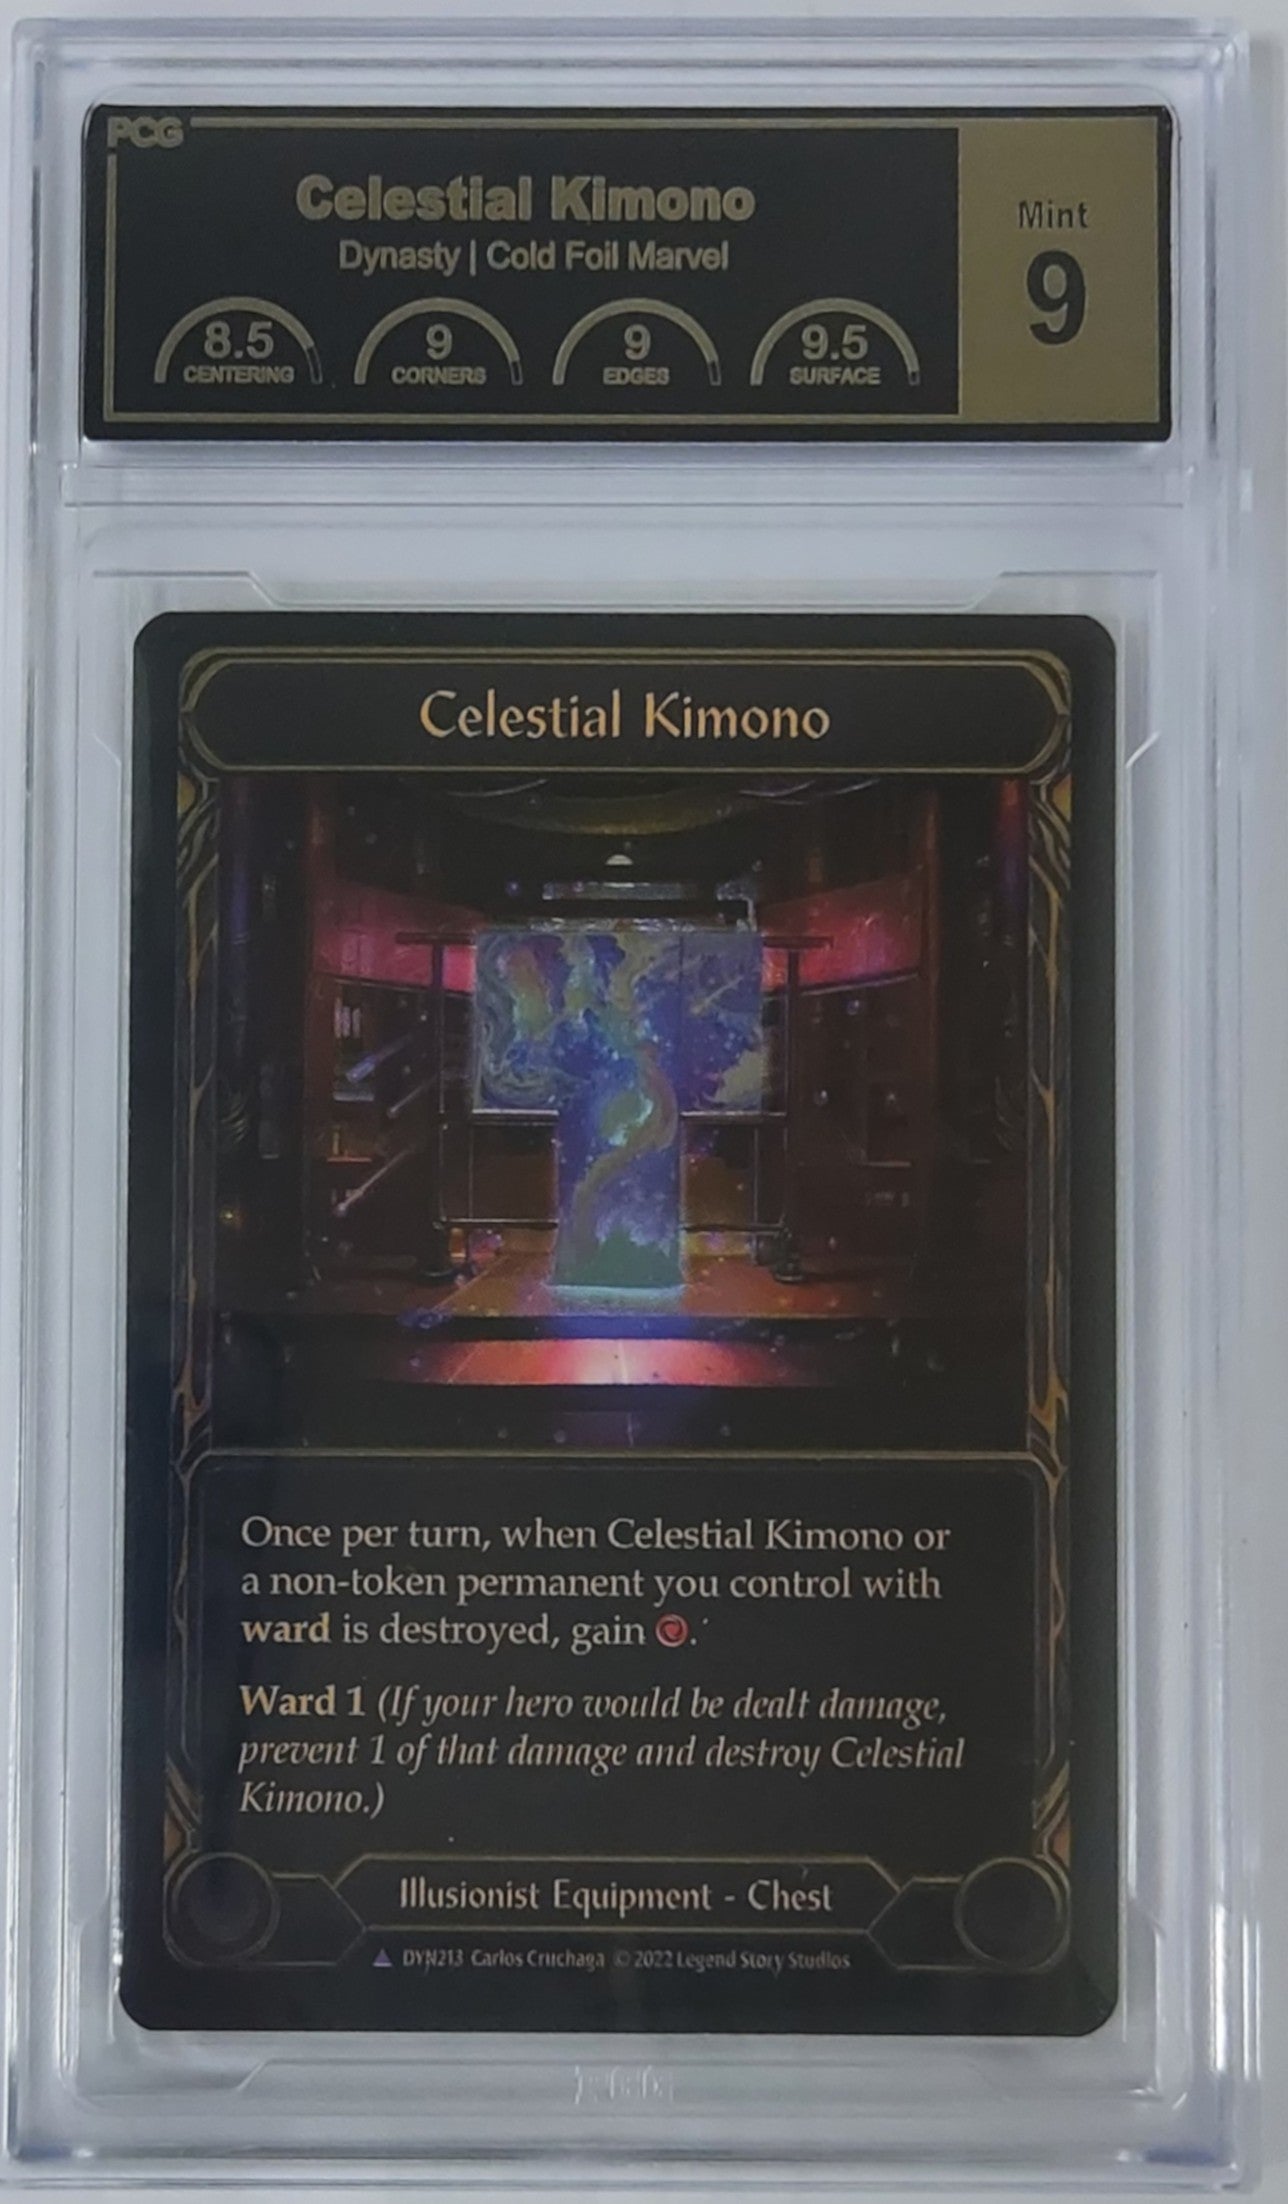 [PCG 9] [Marvel] Celestial Kimono - DYN213